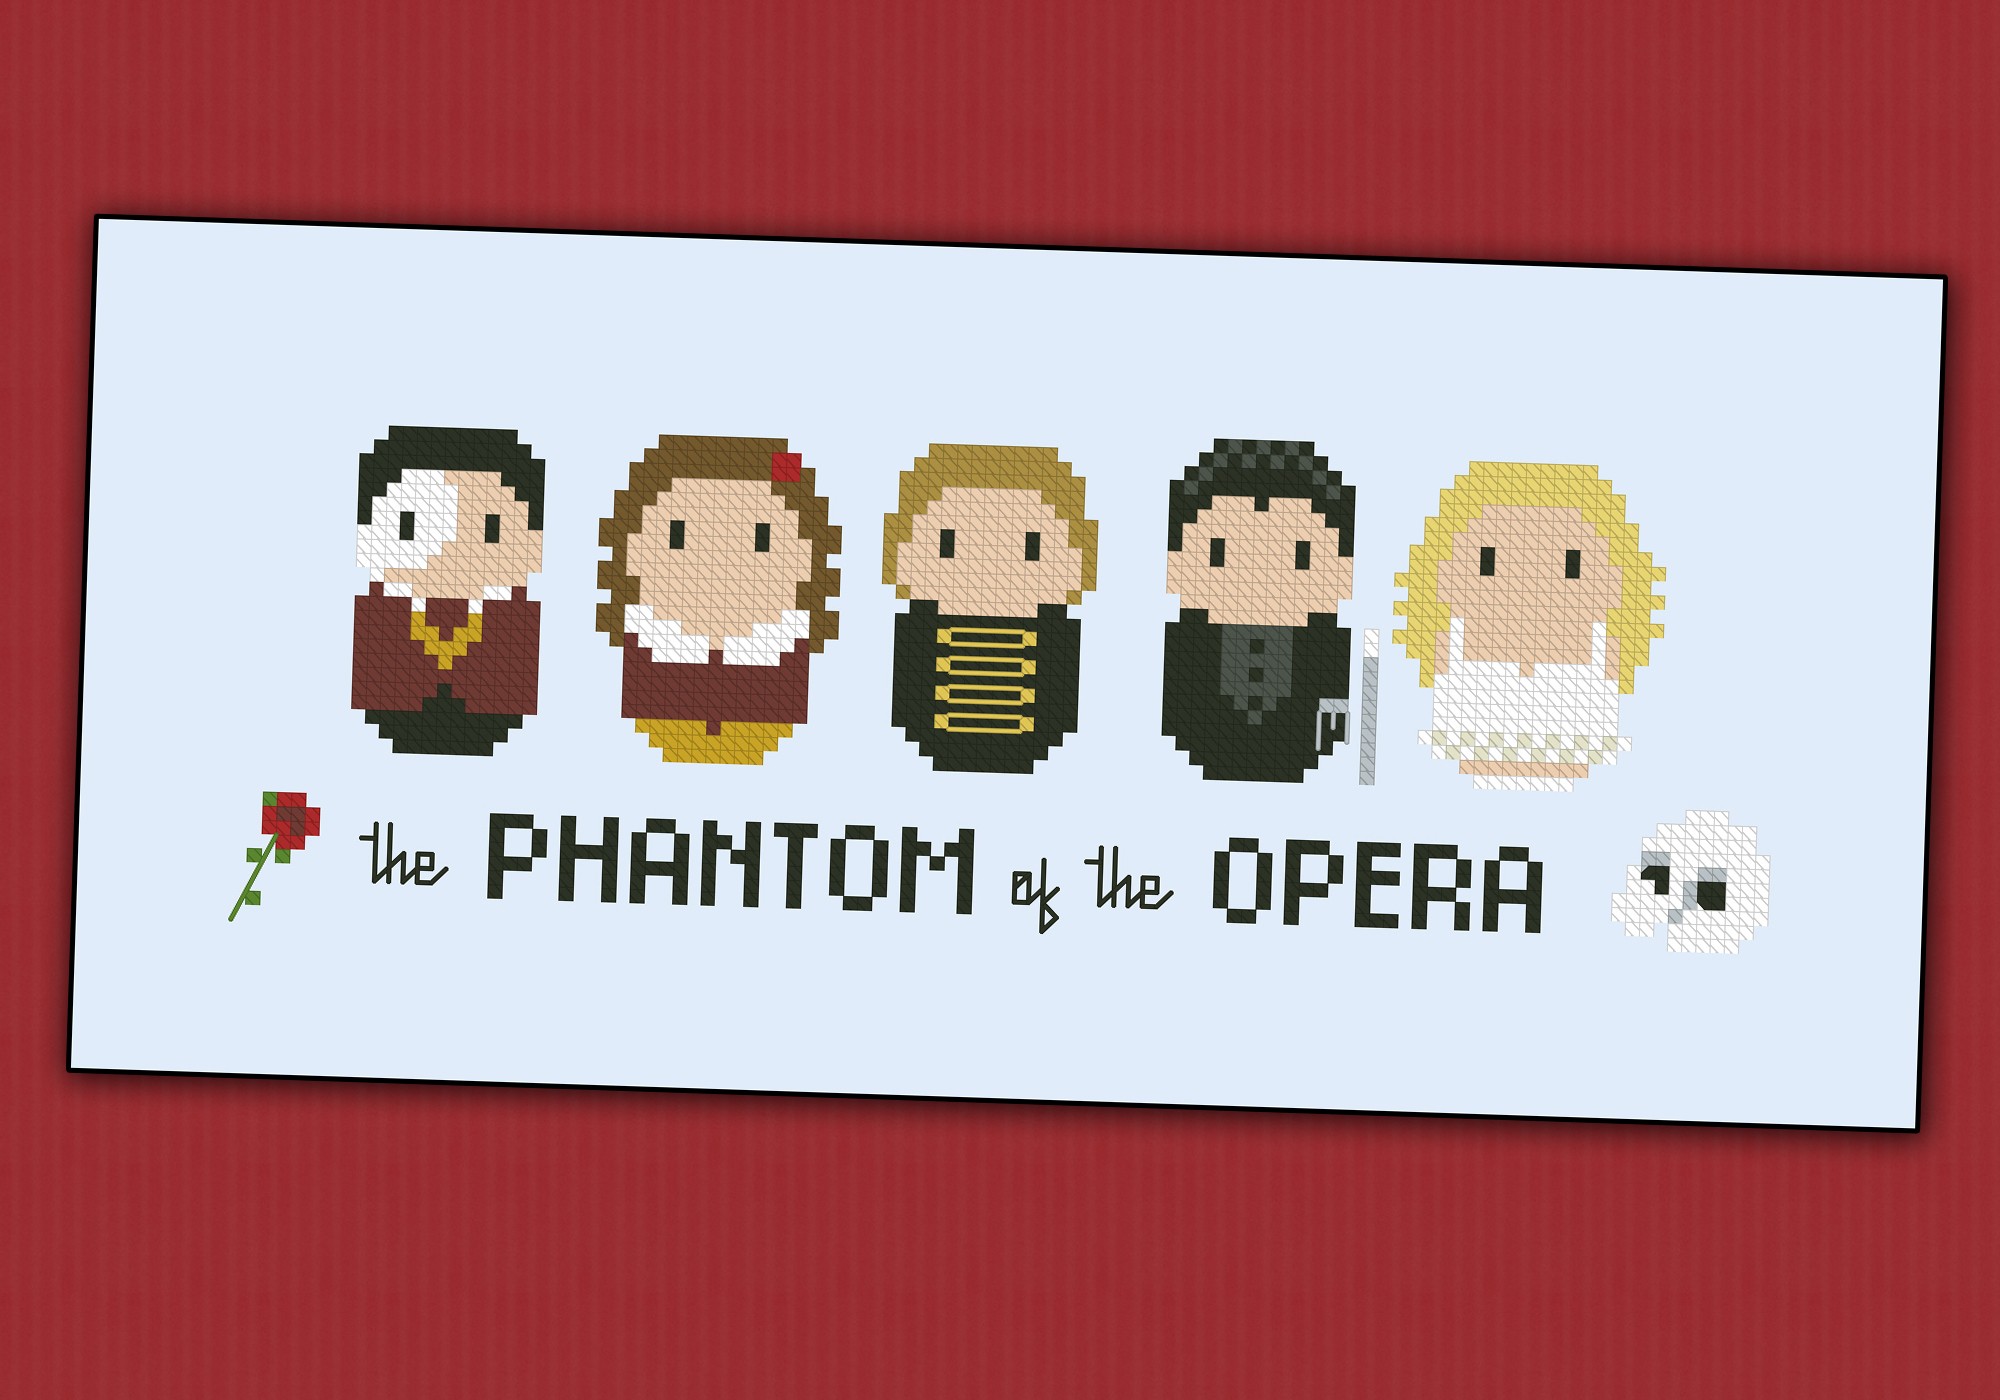 Phantom of the Opera Songs Broadway PDF Cross Stitch 